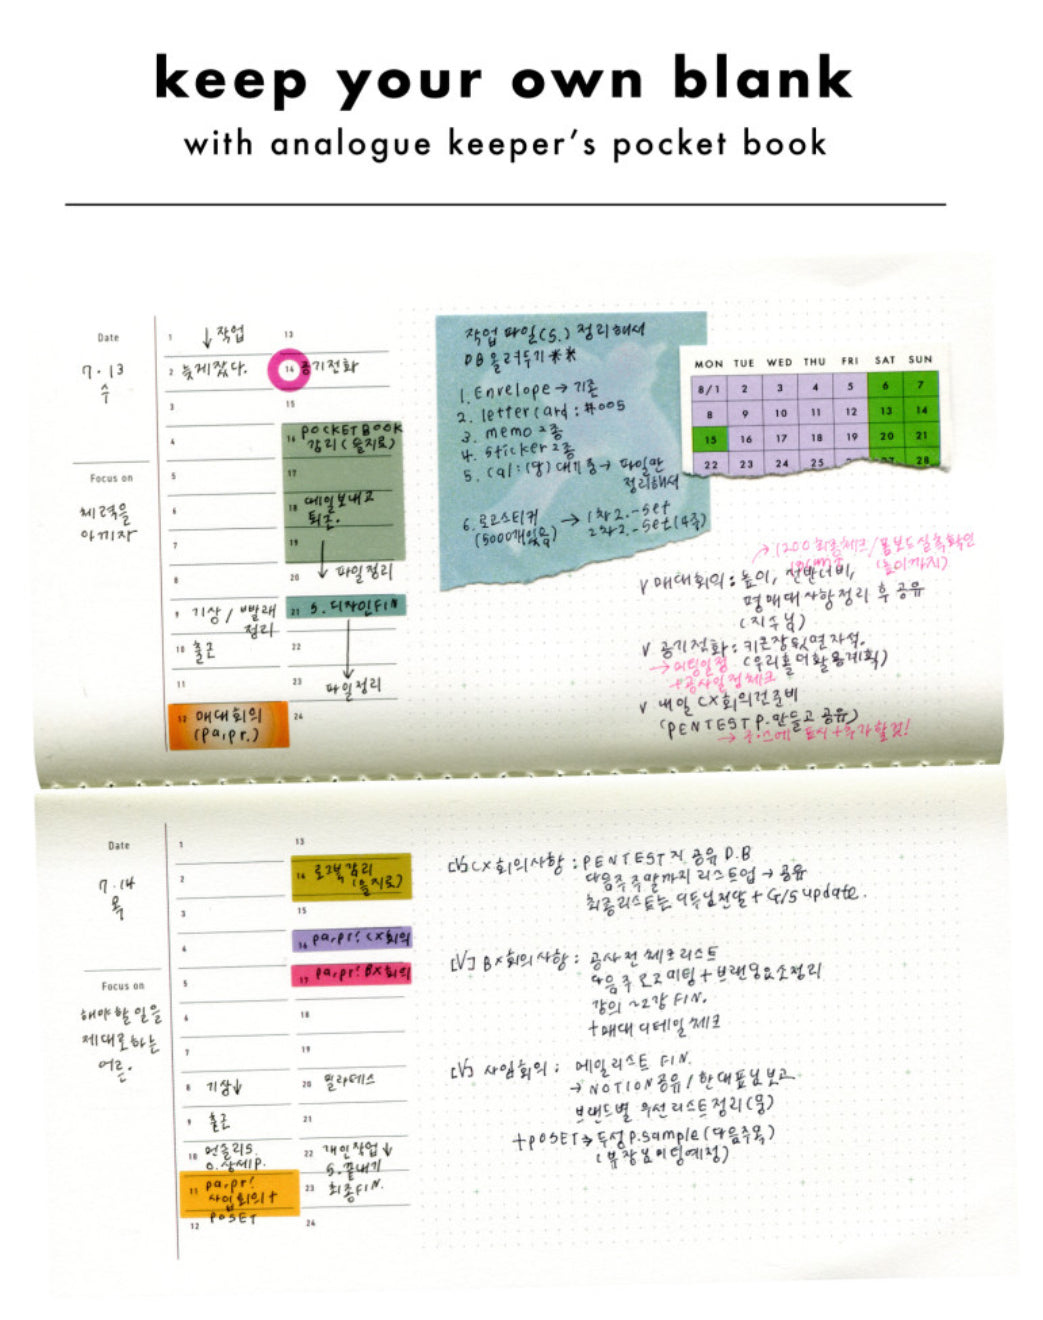 Analogue Keeper Pocket Book // Daily